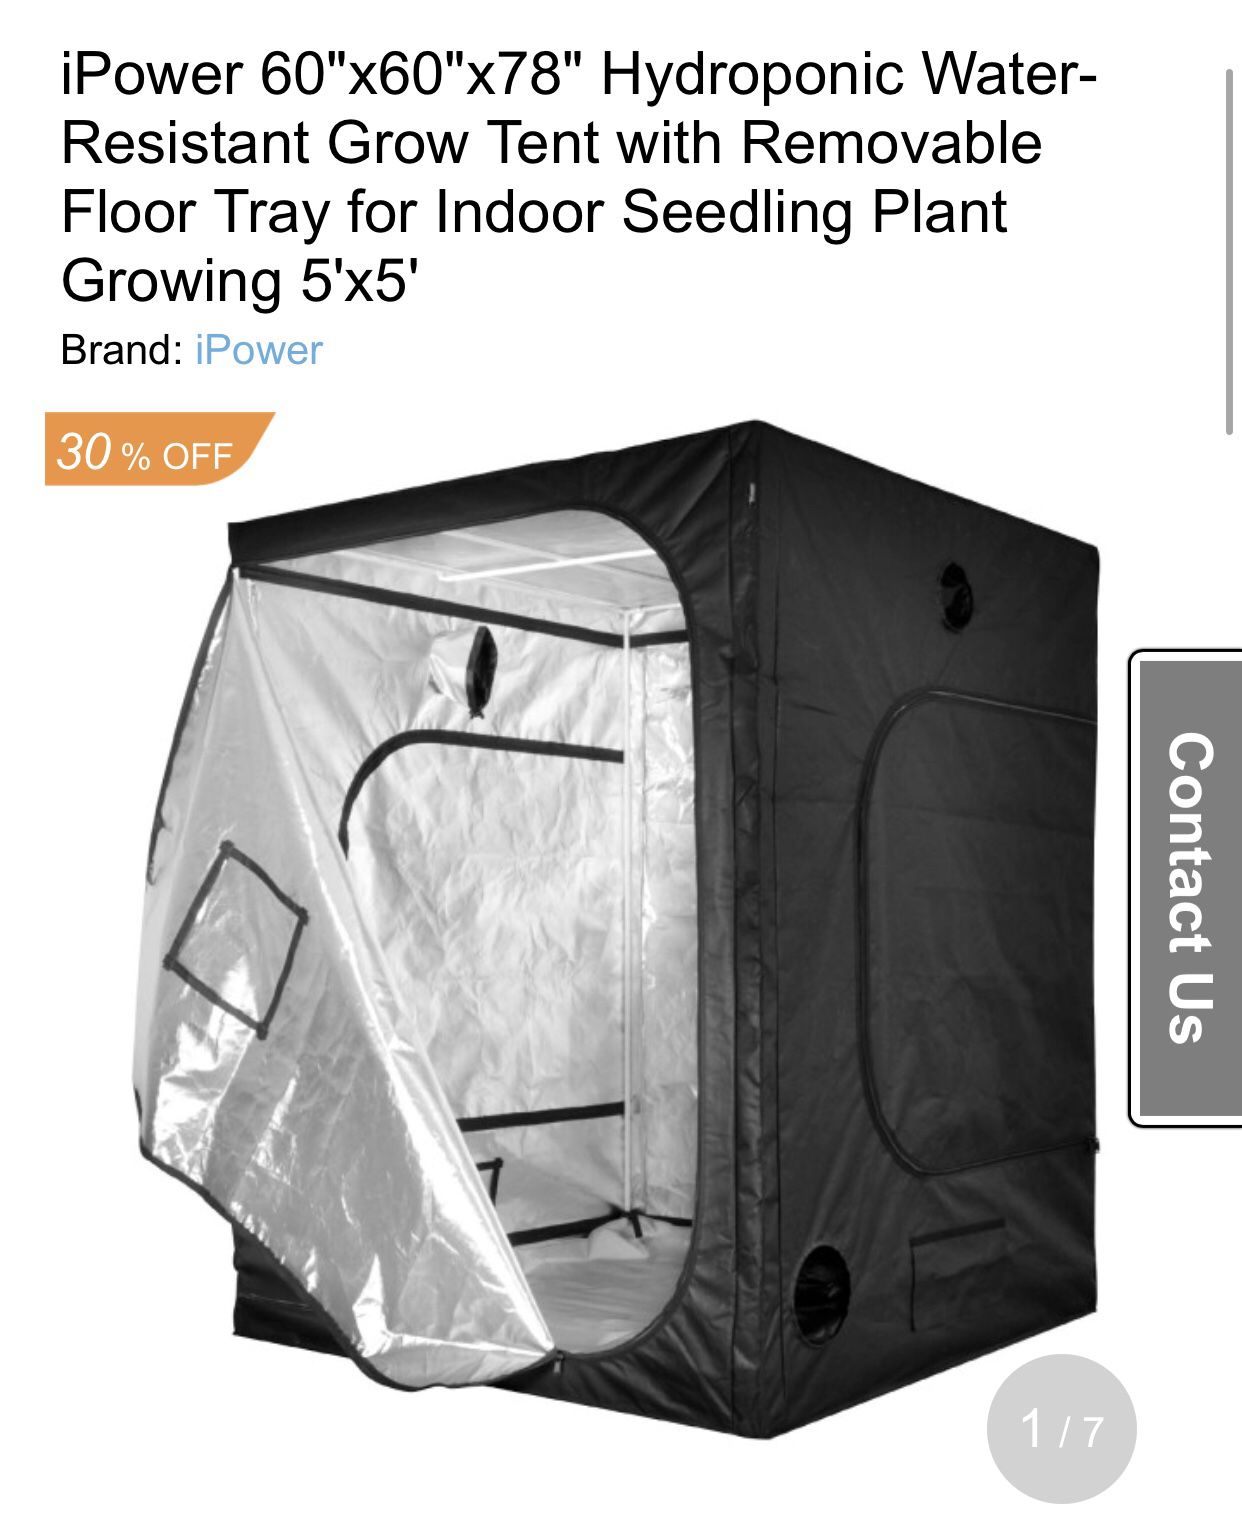 Hydroponic grow tent